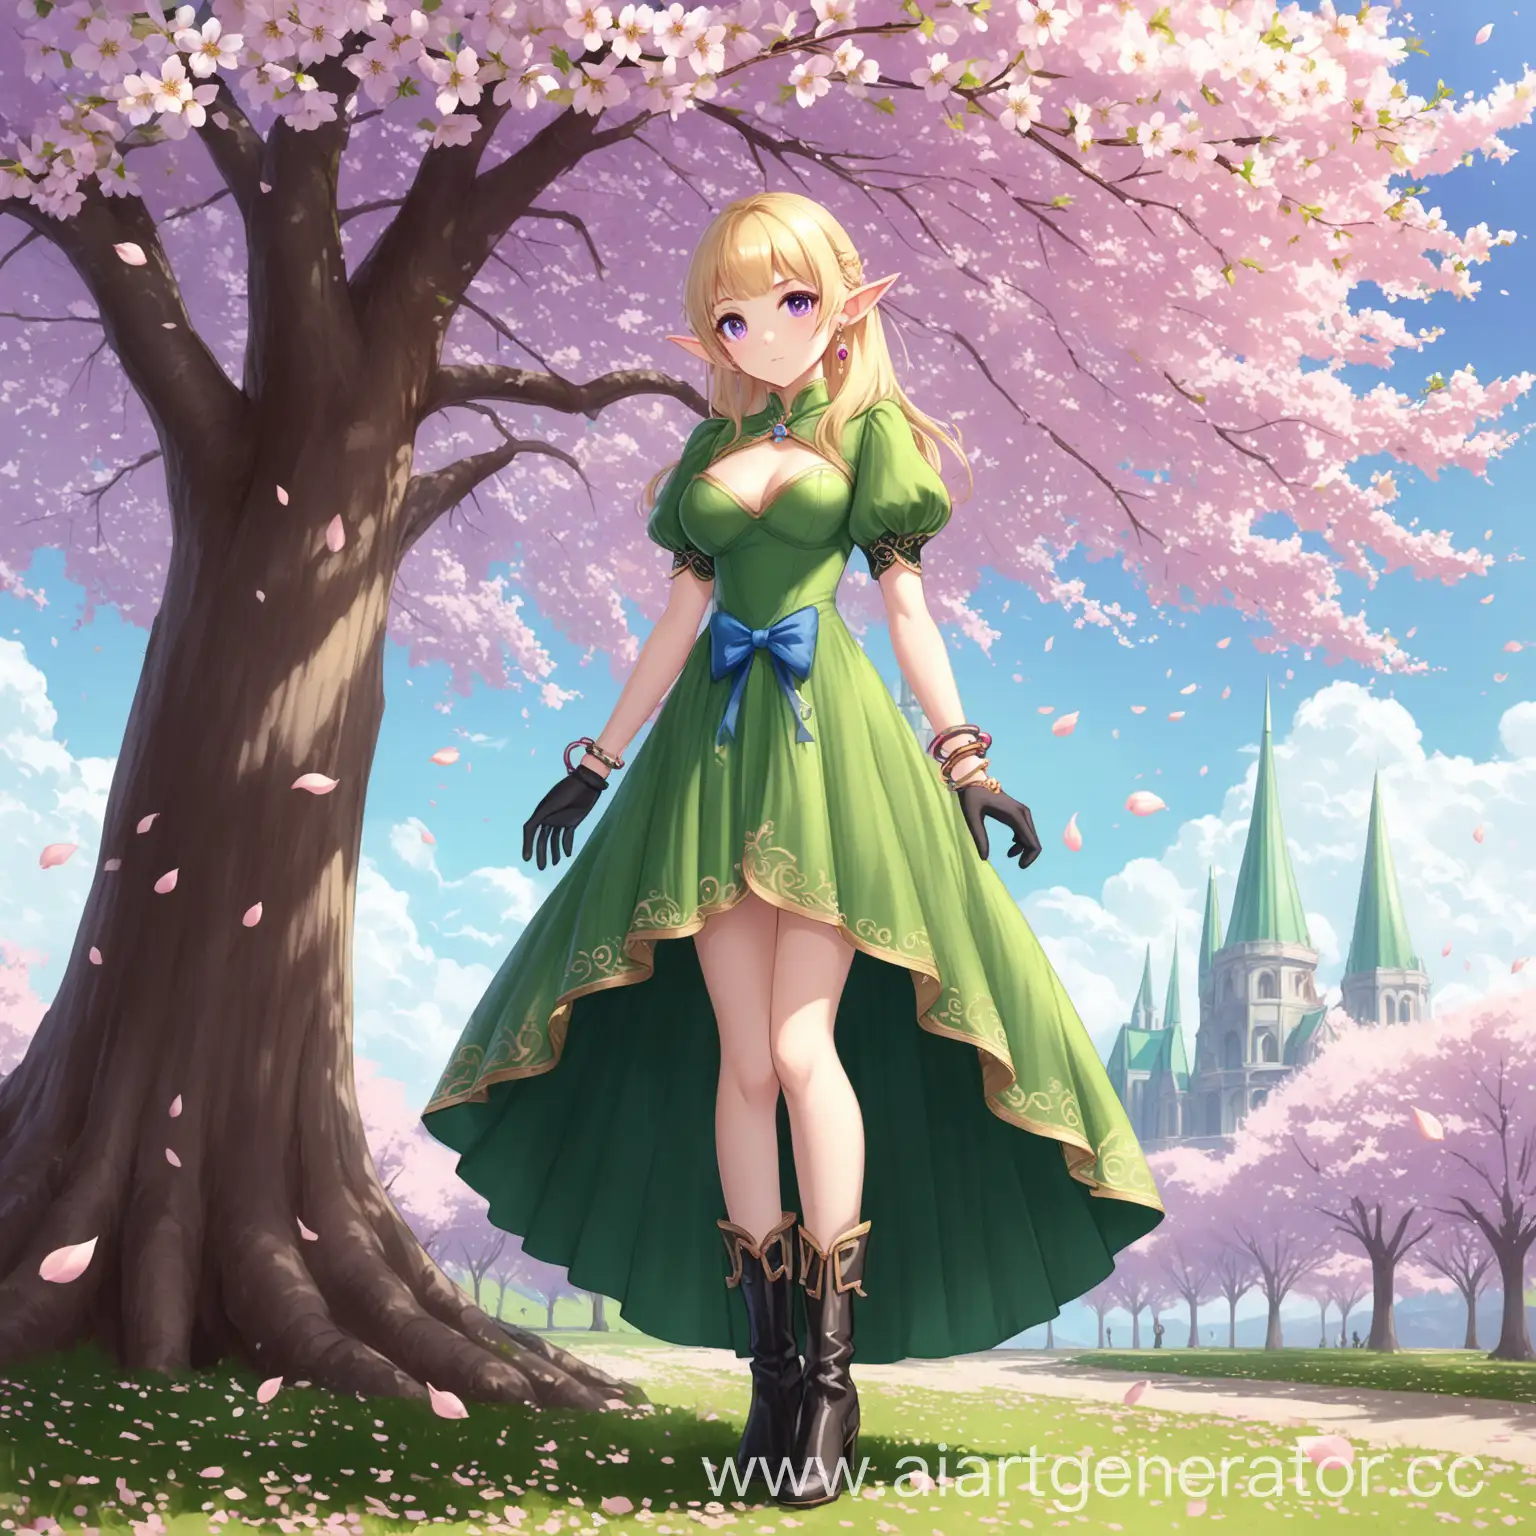 Elf-Girl-in-Green-Dress-Under-Cherry-Blossoms